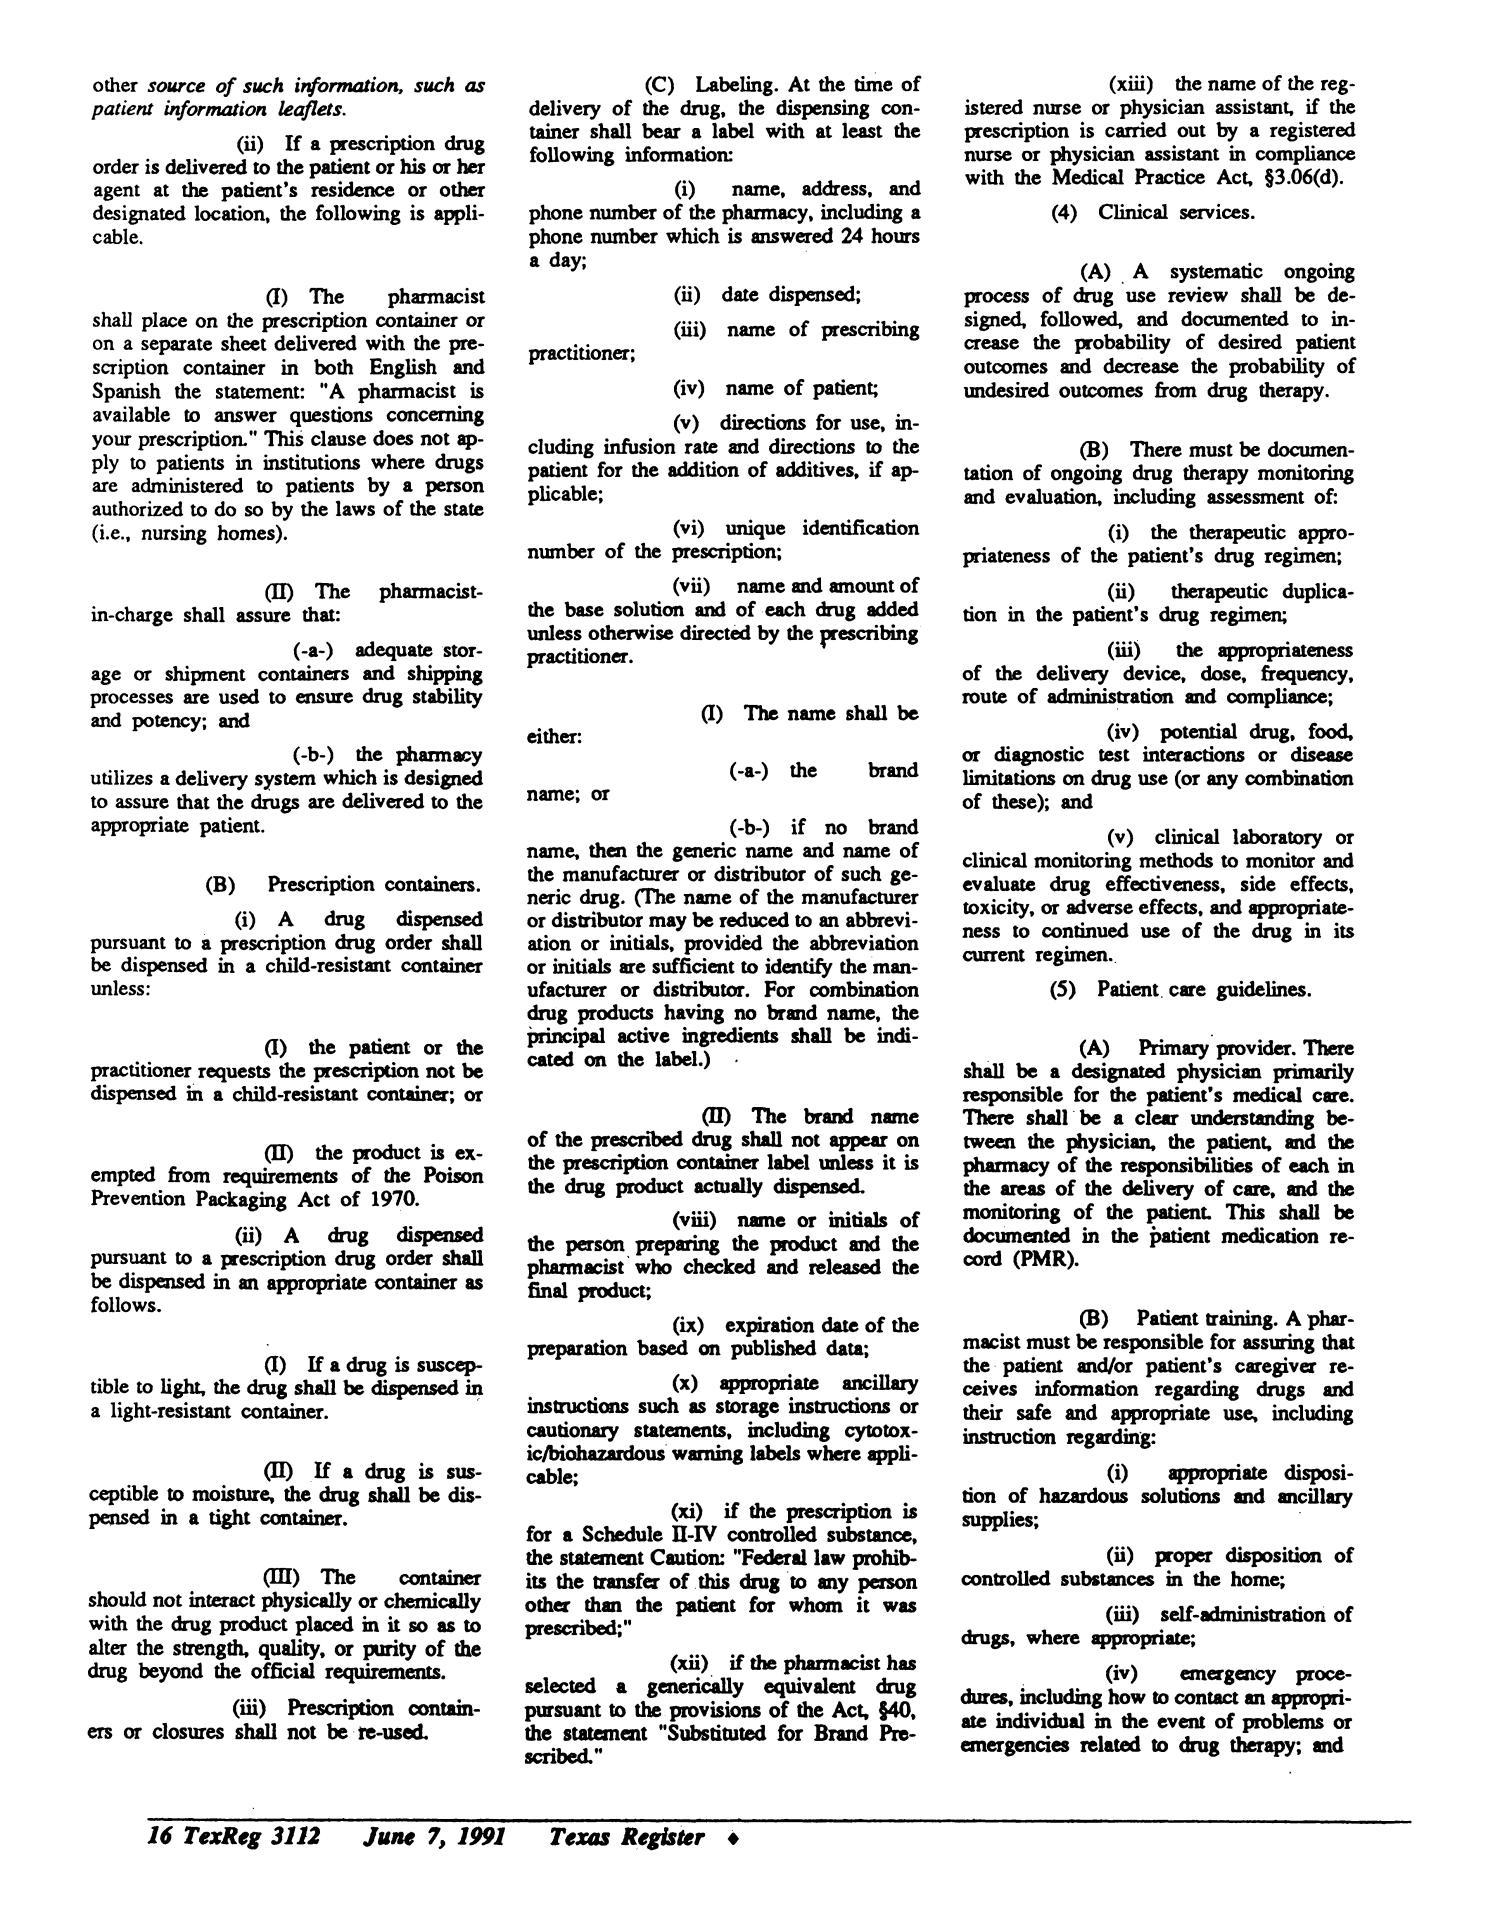 Texas Register, Volume 16, Number 43, Pages 3093-3159, June 7, 1991
                                                
                                                    3112
                                                